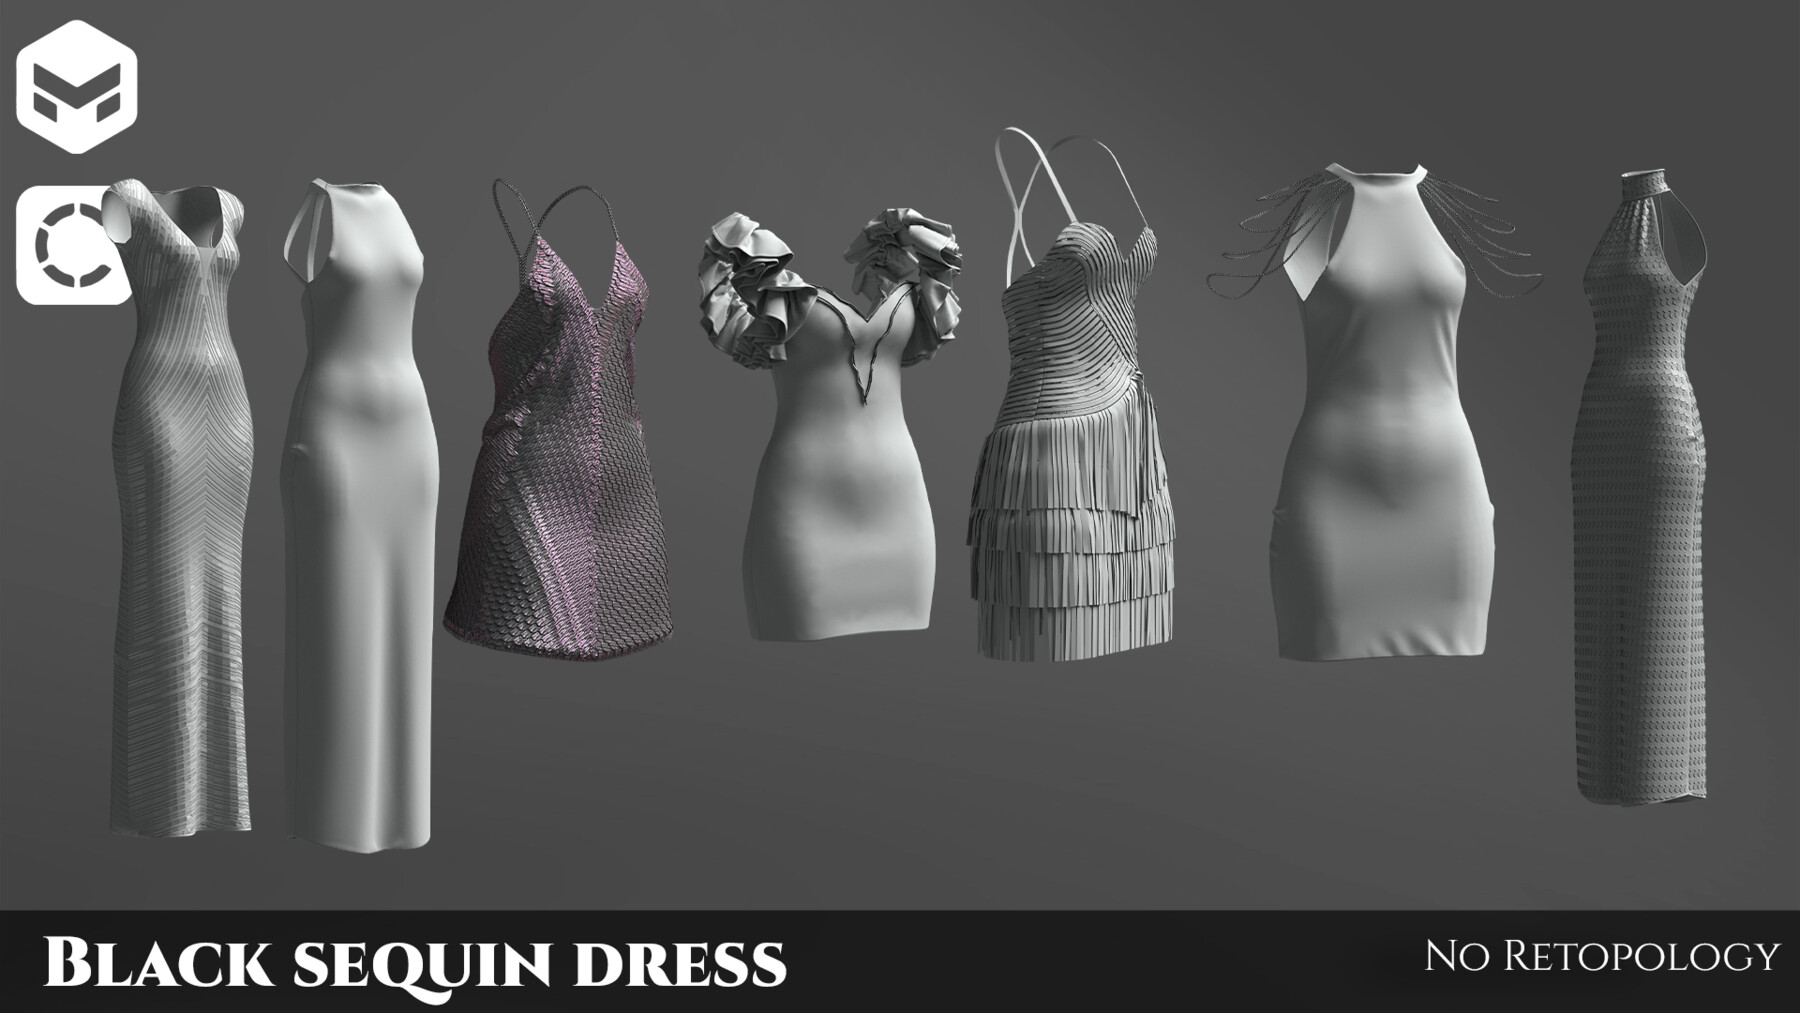 ArtStation - Sequin dress collection | Resources